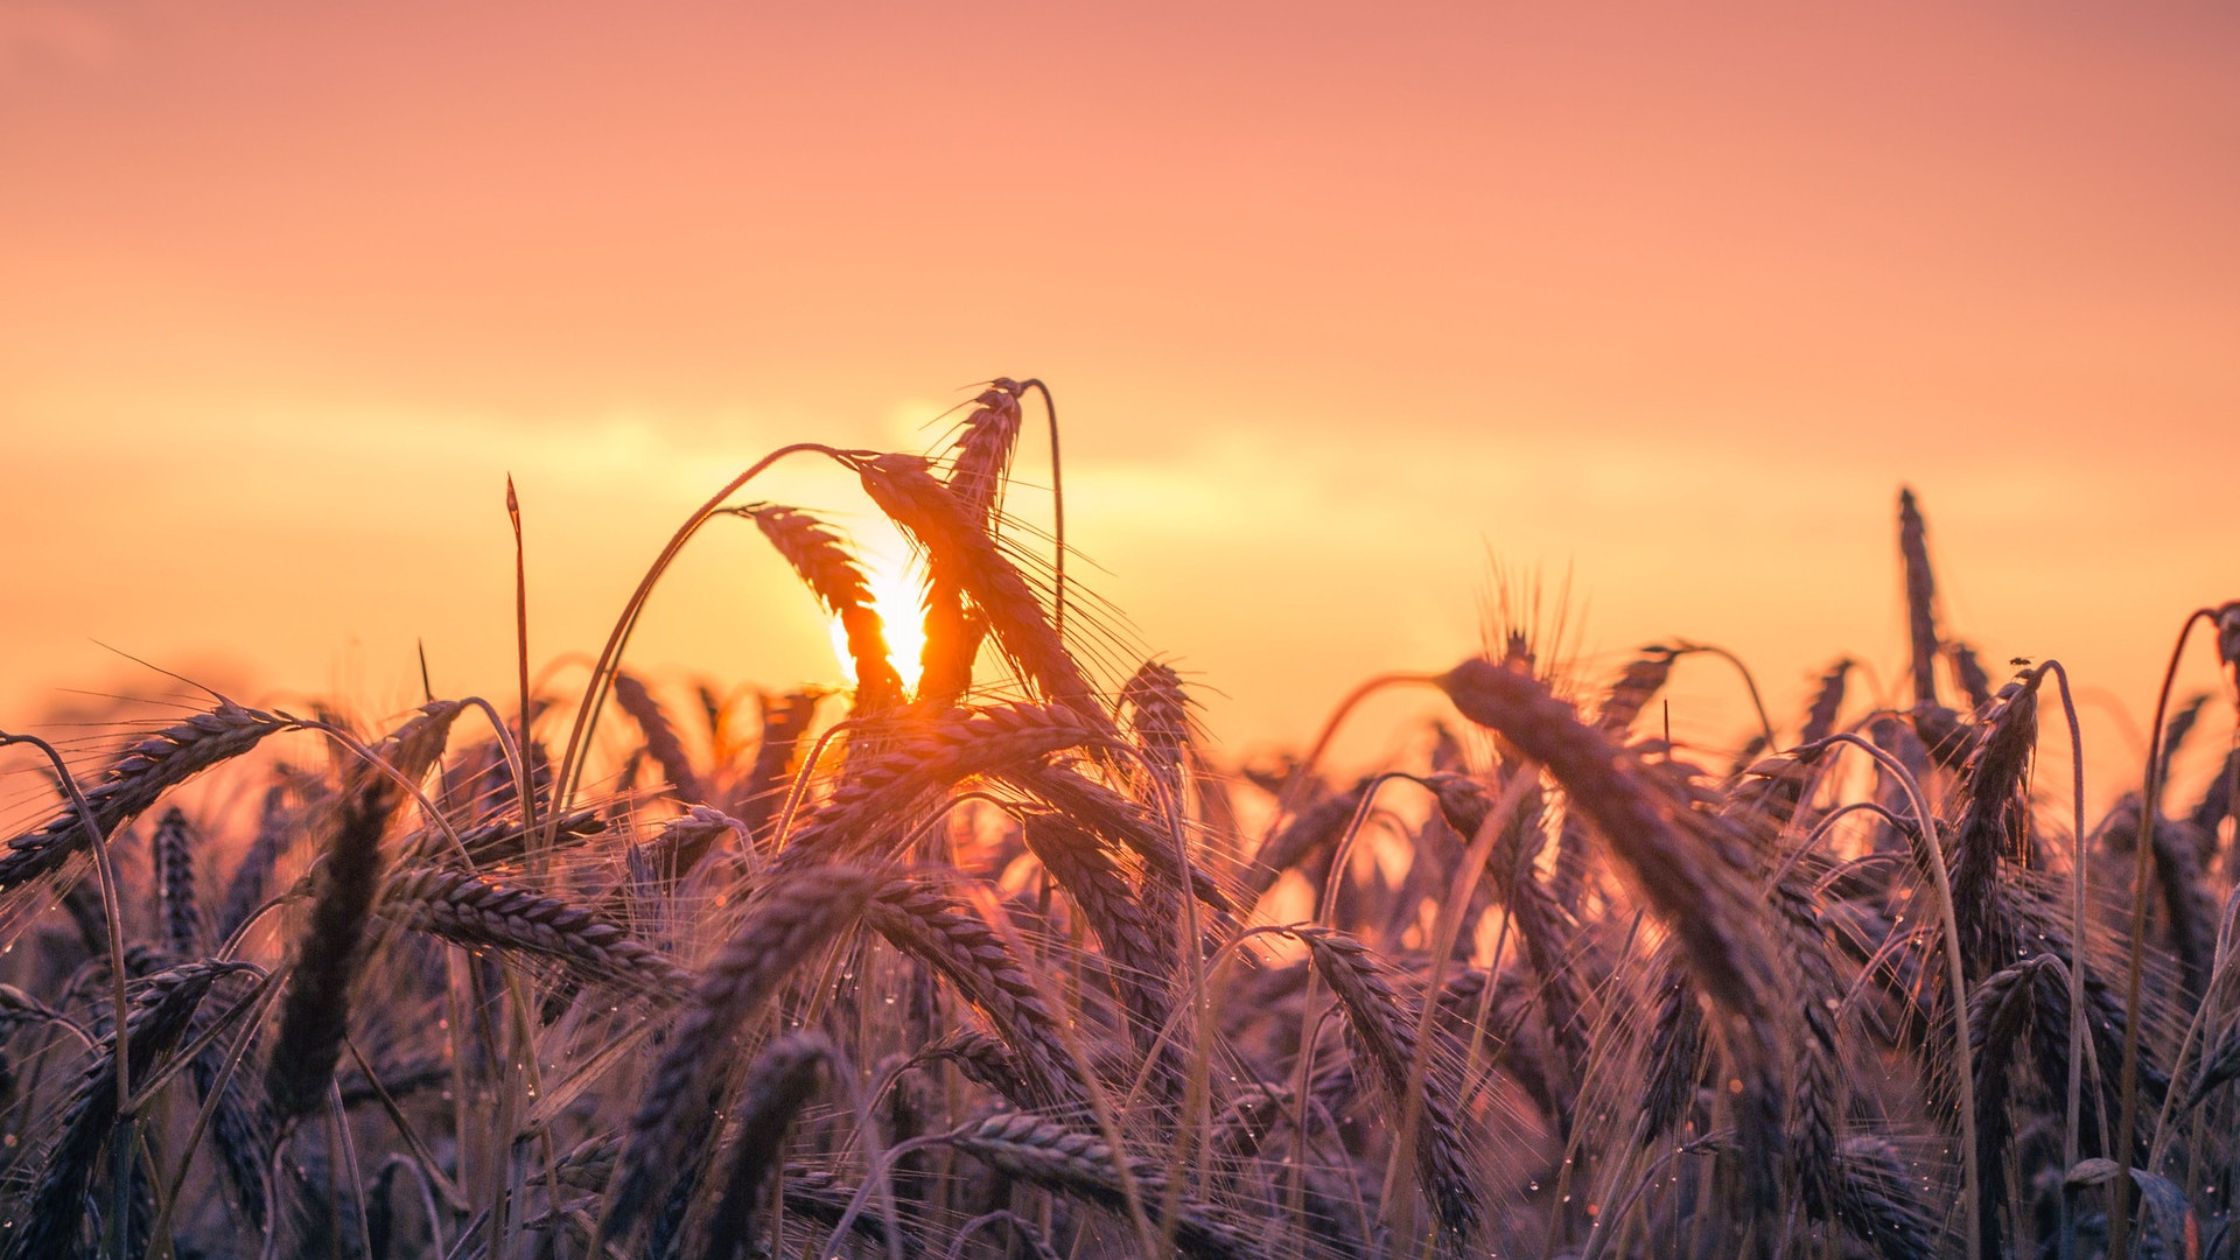 harvest season traditions (wheat)